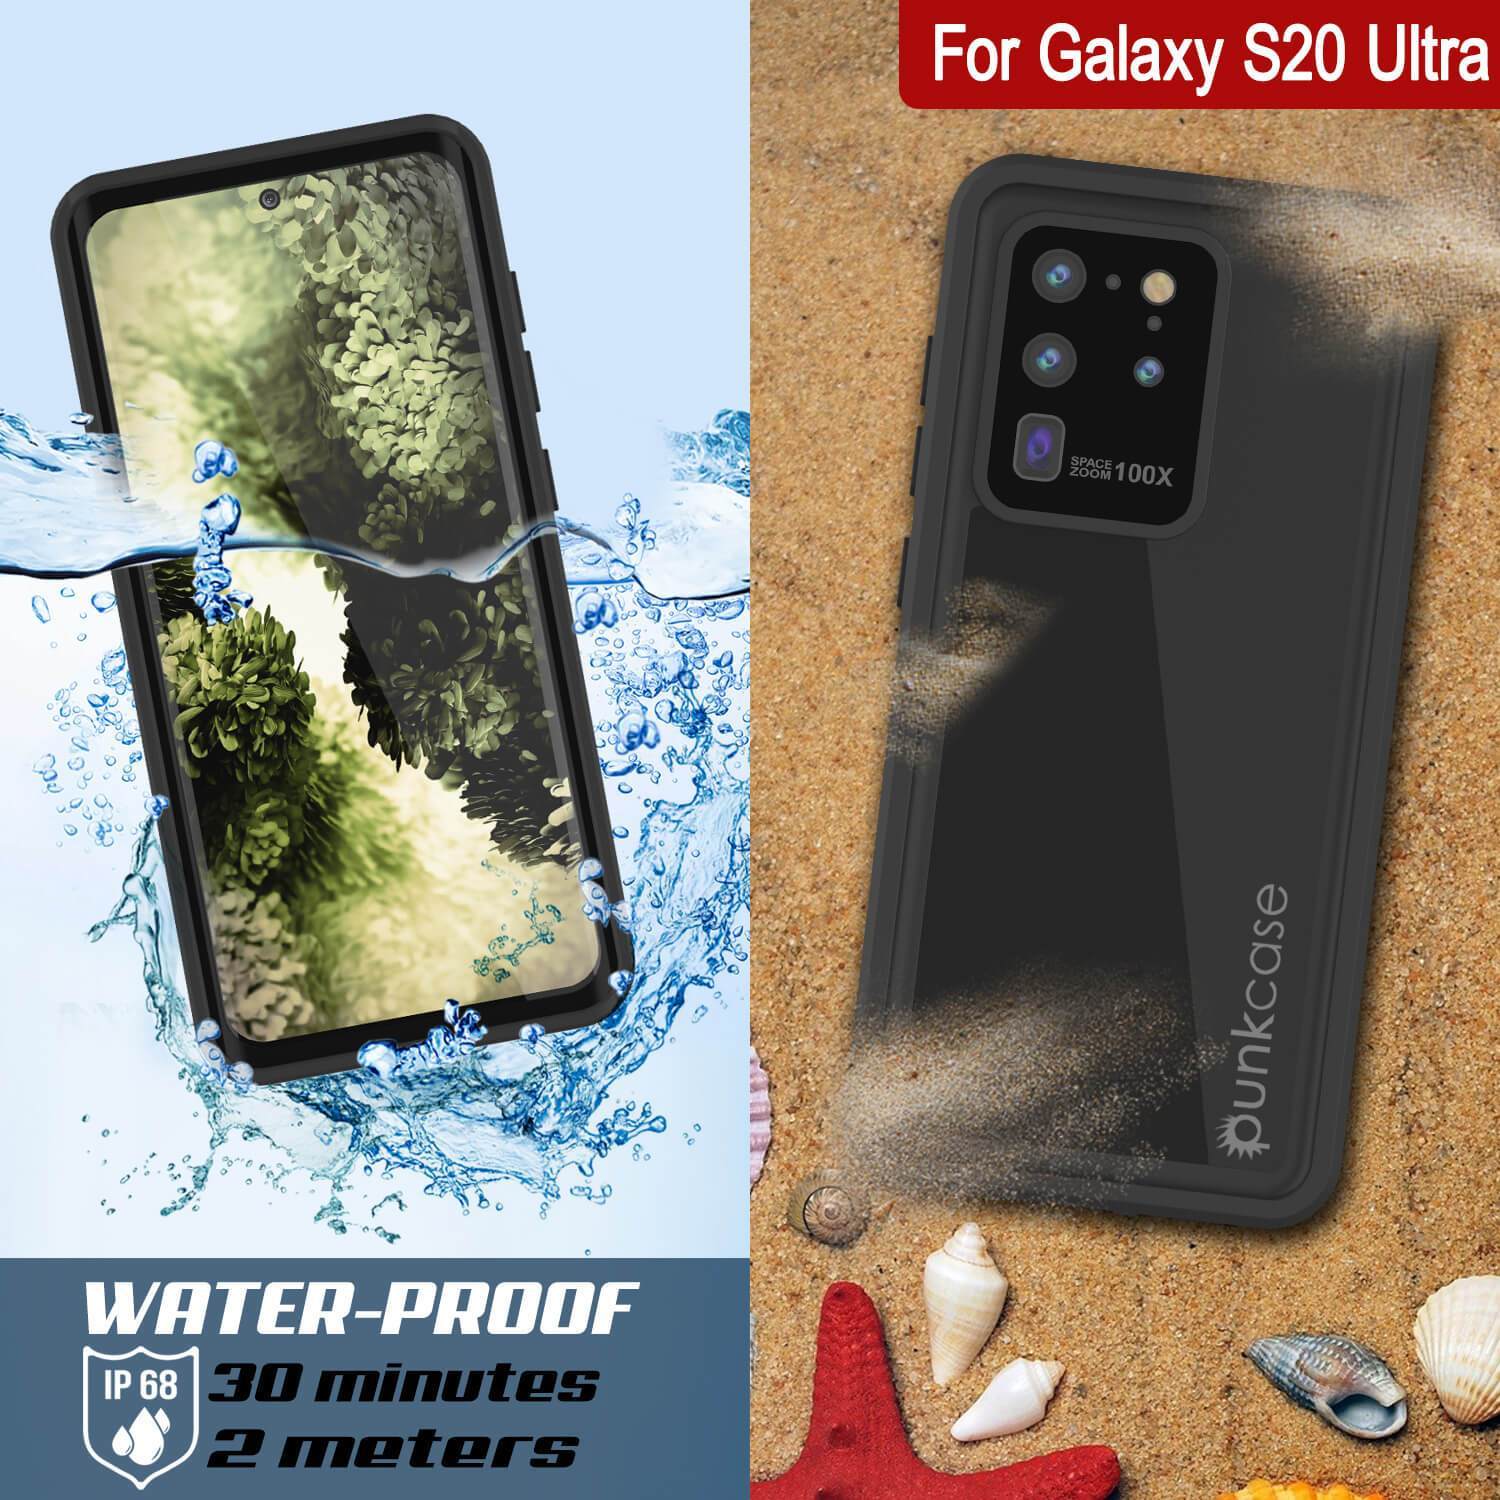 Galaxy S20 Ultra Waterproof Case PunkCase StudStar Clear Thin 6.6ft Underwater IP68 Shock/Snow Proof